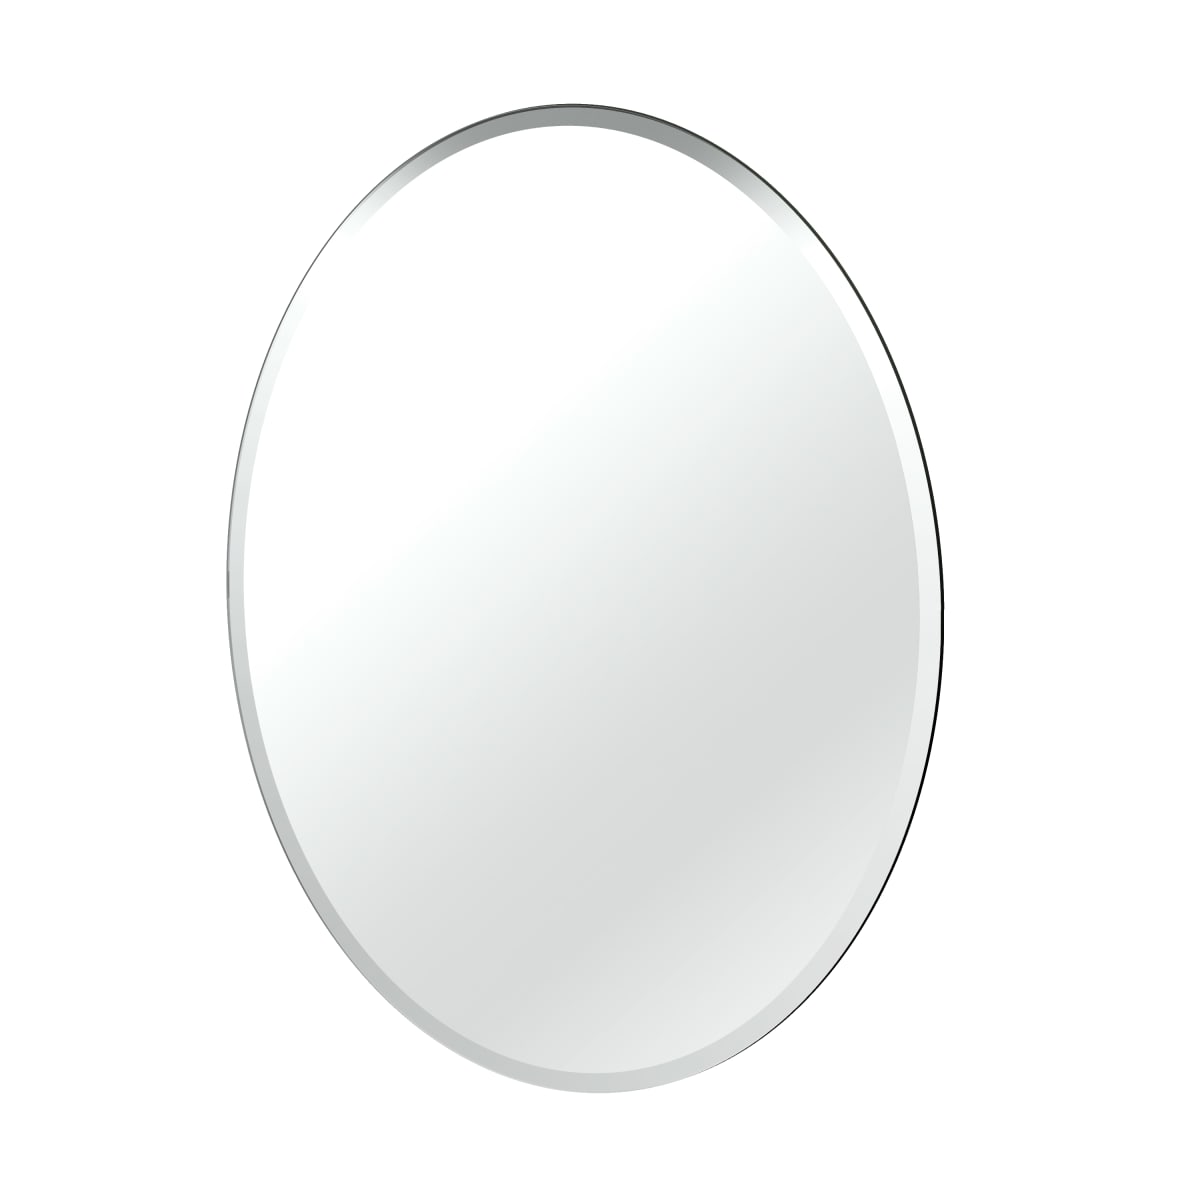 Gatco 1801 32" x 24" Frameless, Flush Mount Oval Mirror